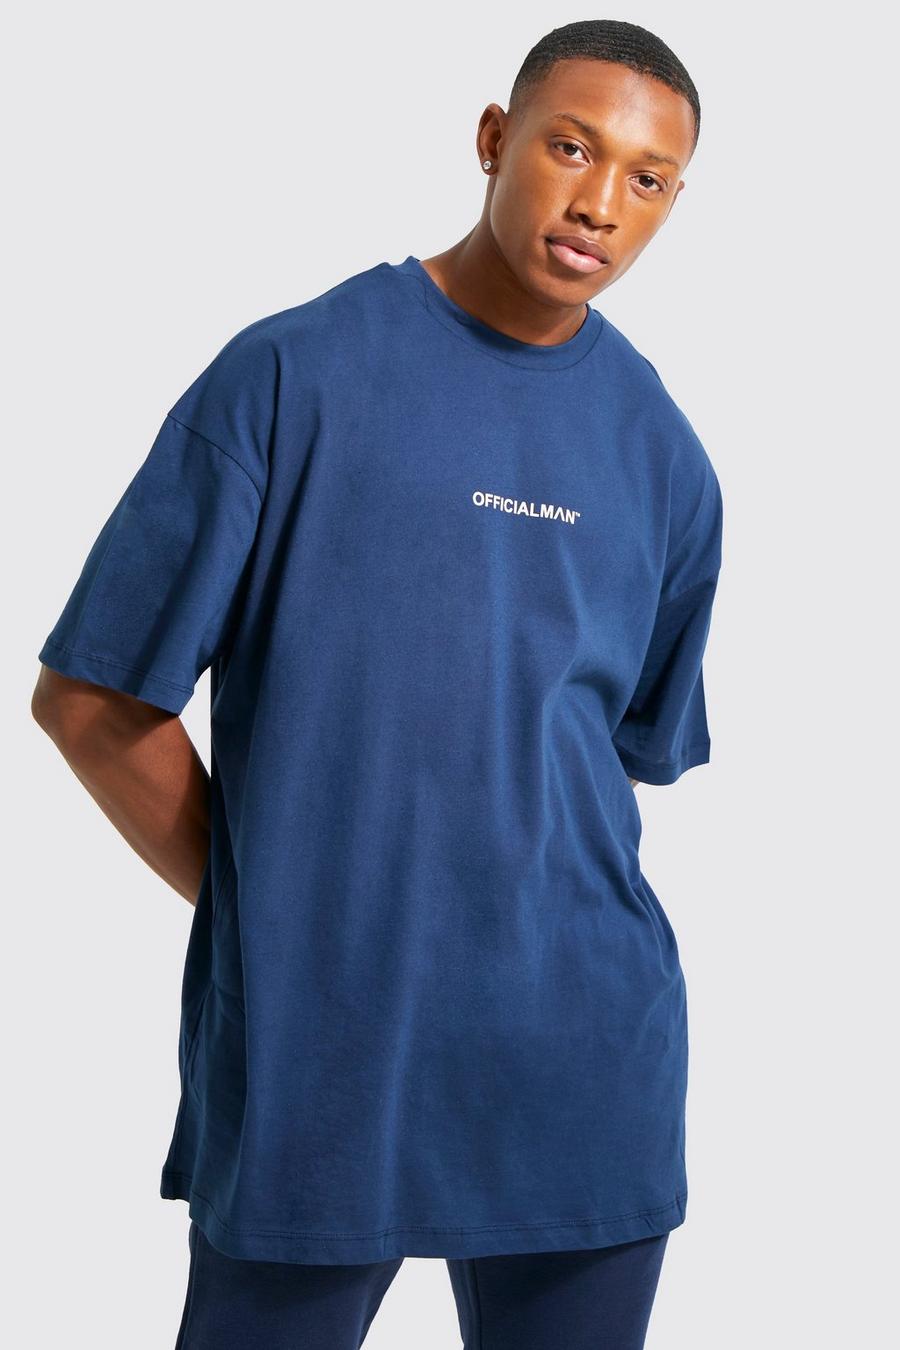 Navy marineblau Official Man Oversized Crew Neck T-shirt